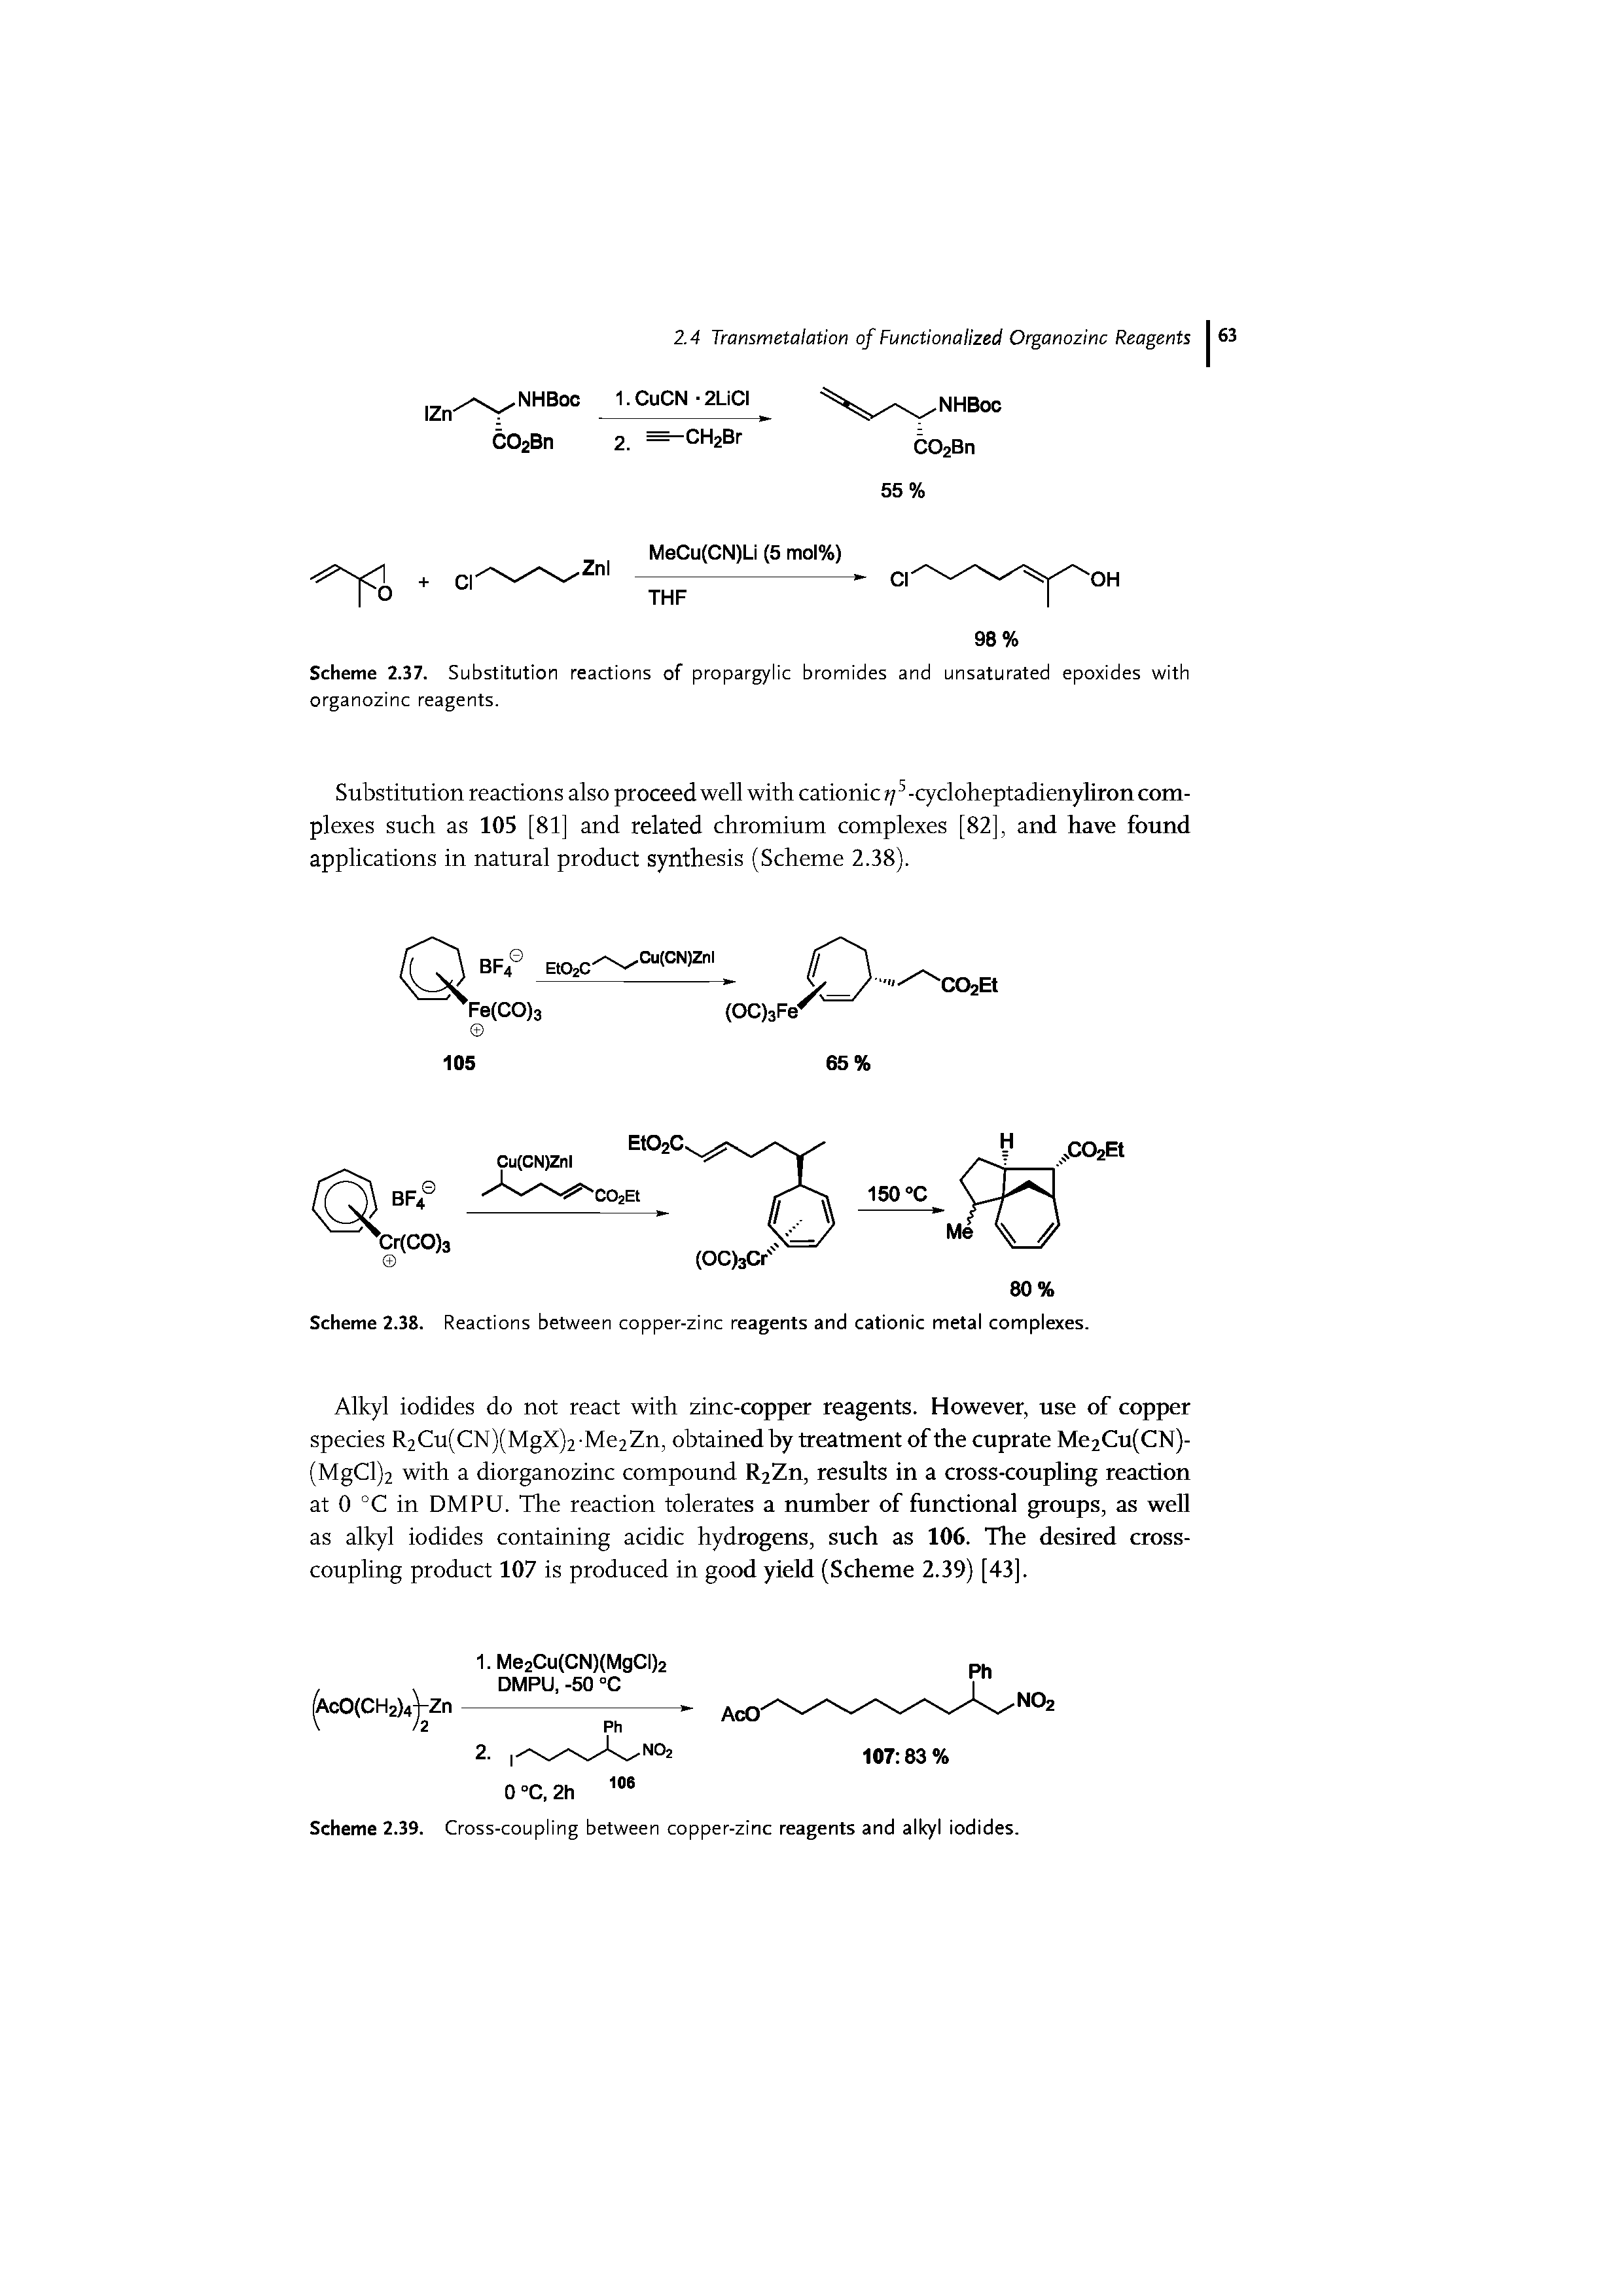 Scheme 2.38. Reactions between copper-zinc reagents and cationic metal complexes.